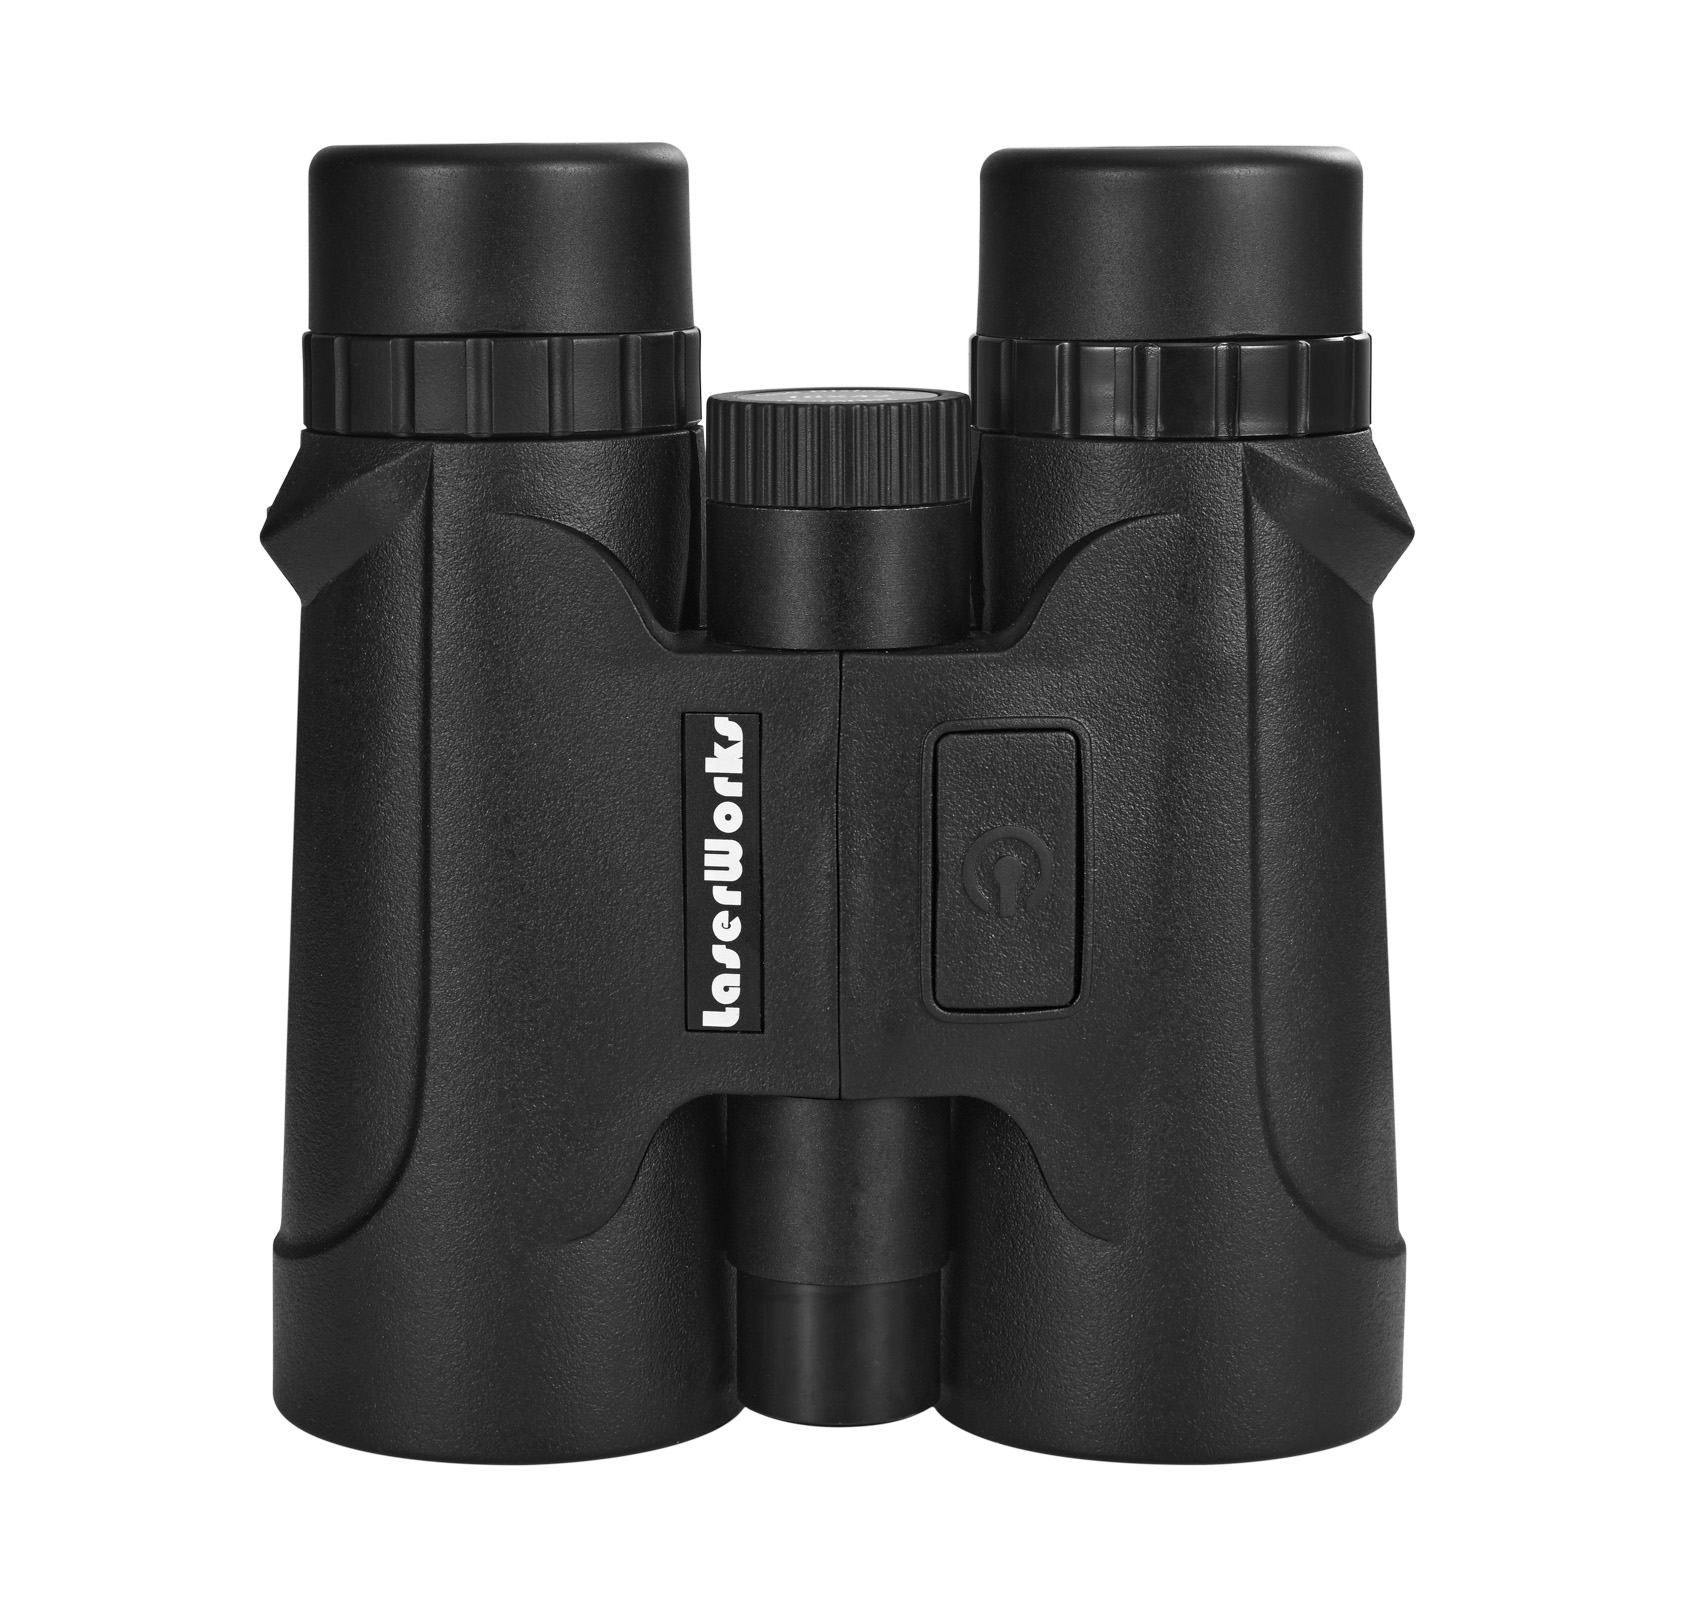 Why we need a Rangefinder Binoculars